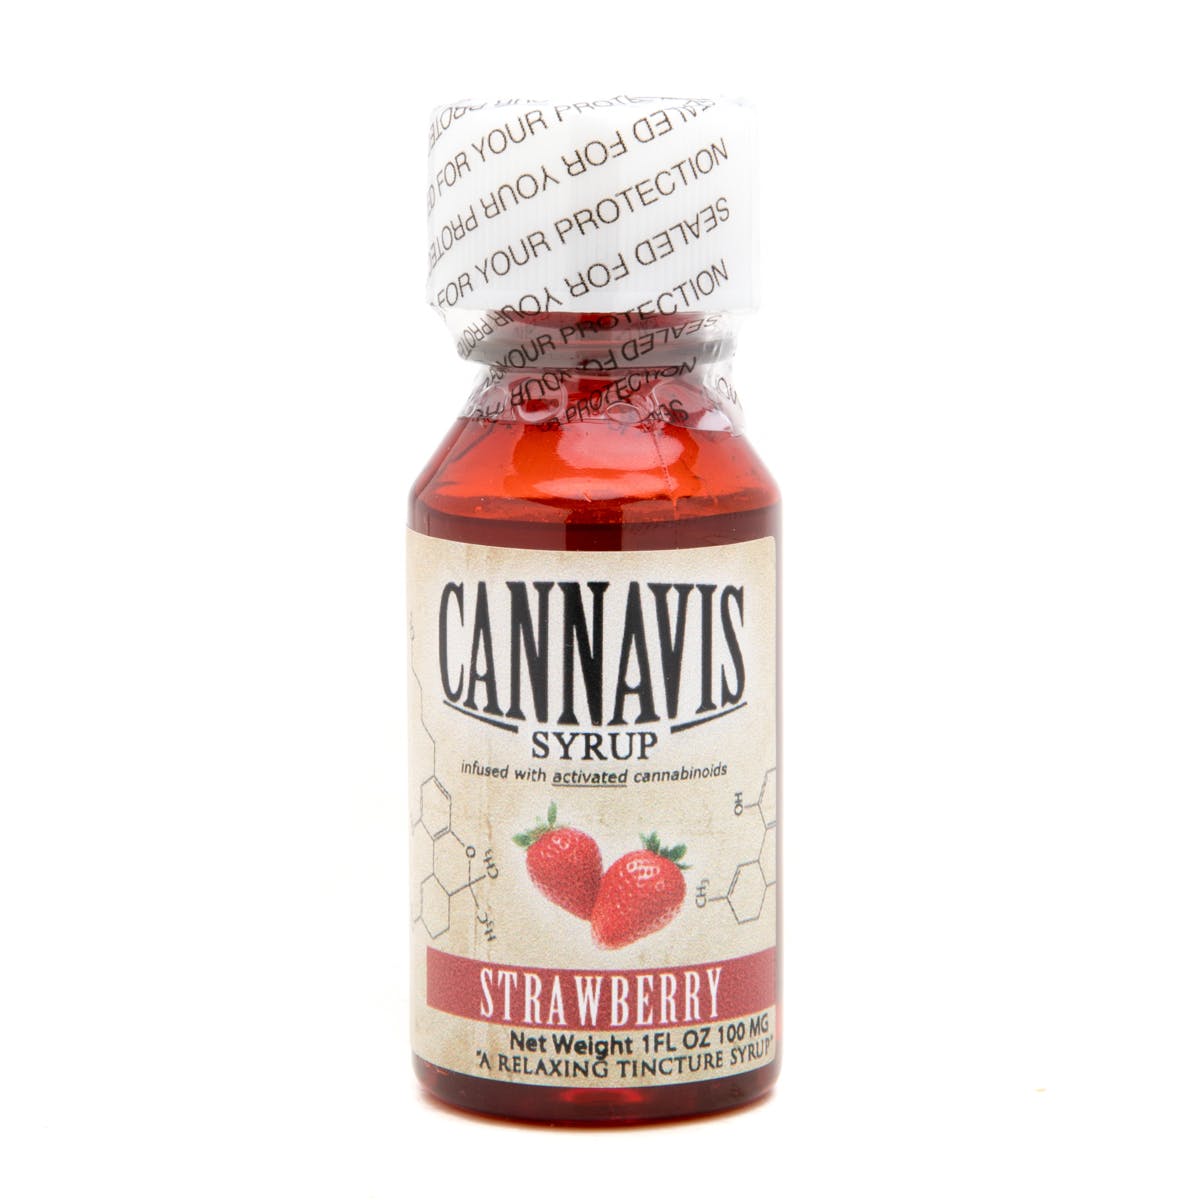 marijuana-dispensaries-breaking-bud-20-cap-in-los-angeles-cannavis-syrup-2c-strawberry-100mg